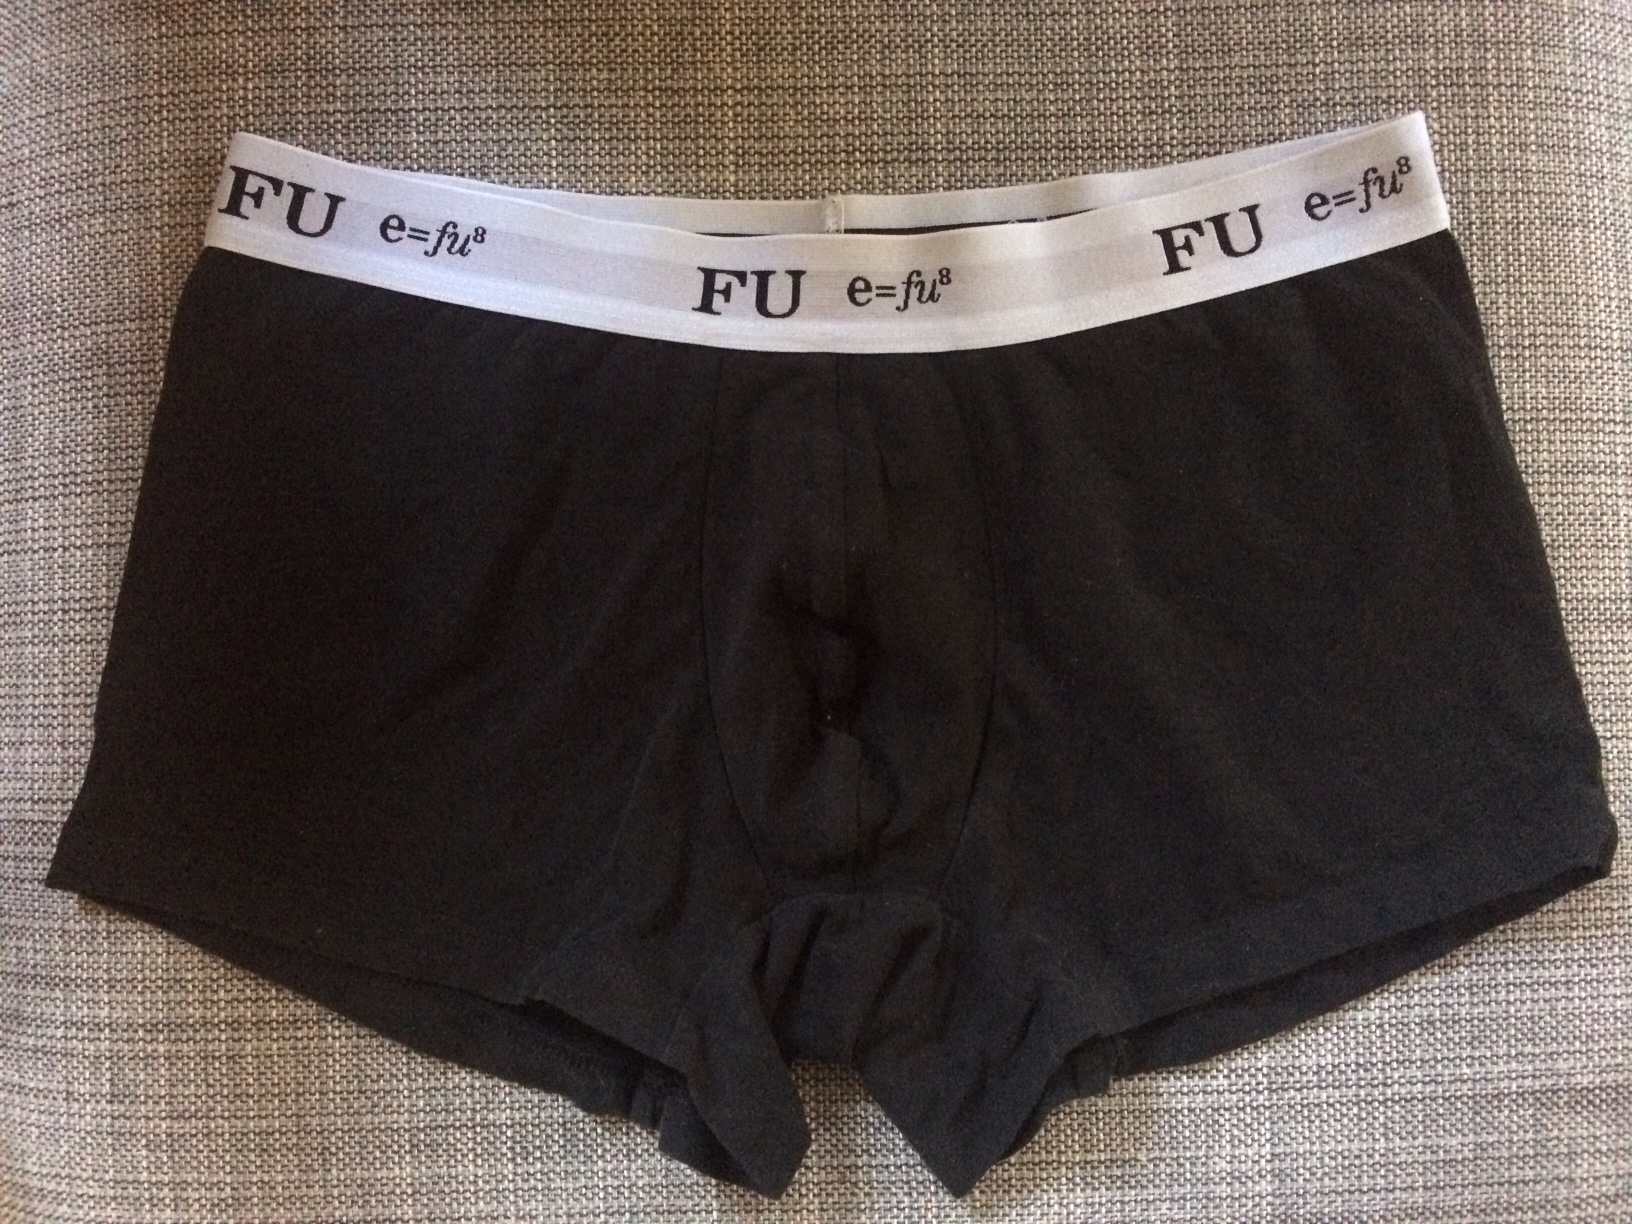 Underwear review: FU e=fu8 - Man Trunk | Men and underwear